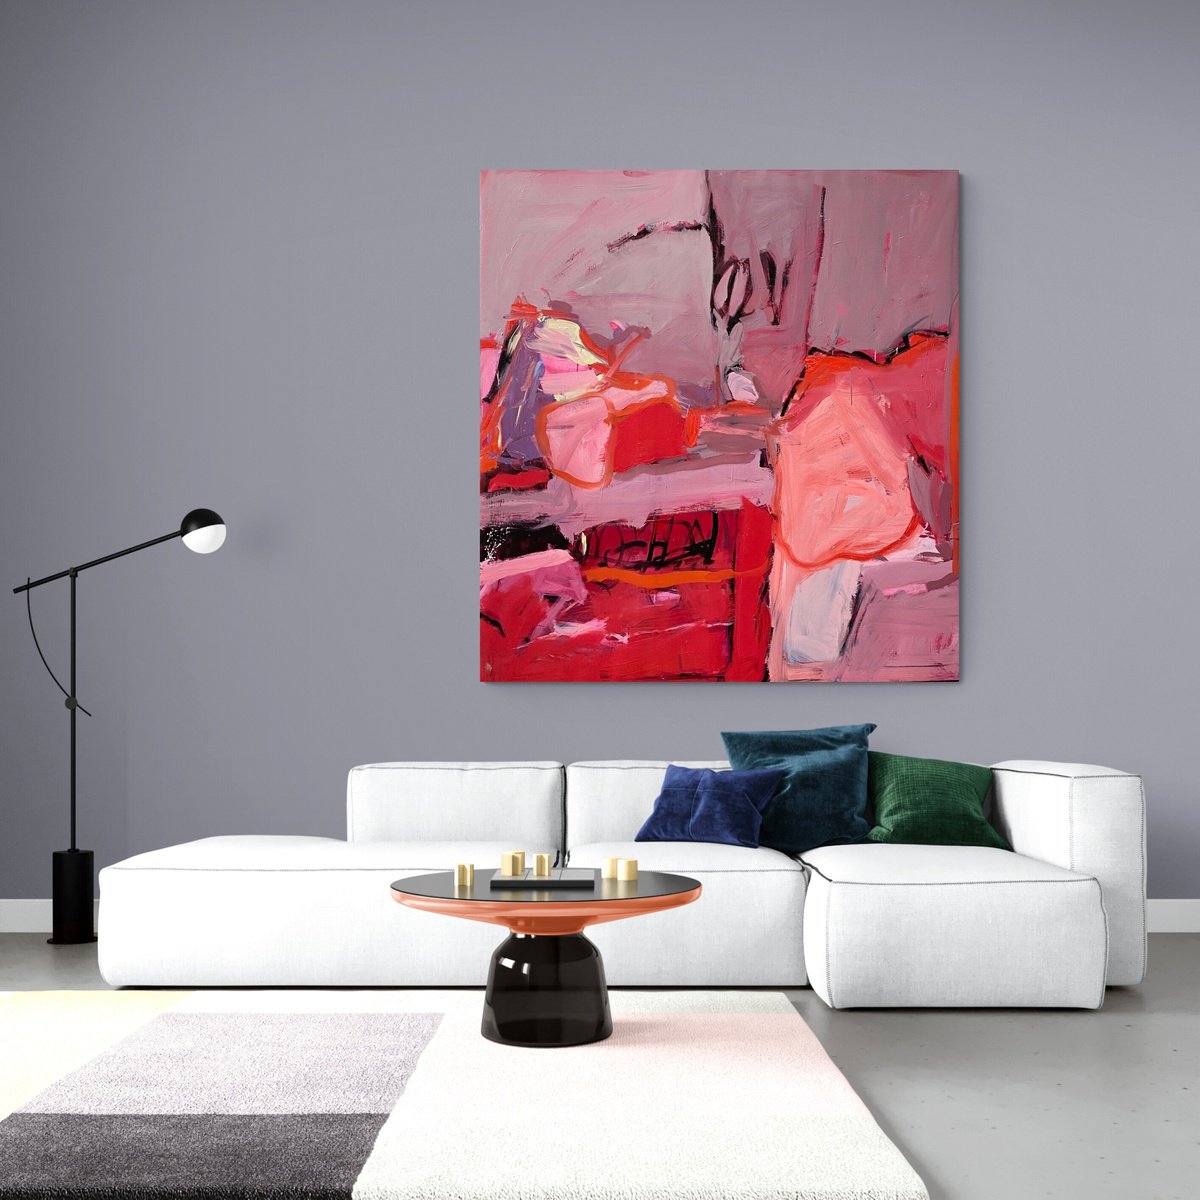 The red studio (homage to Henri Matisse) by Petra Schott